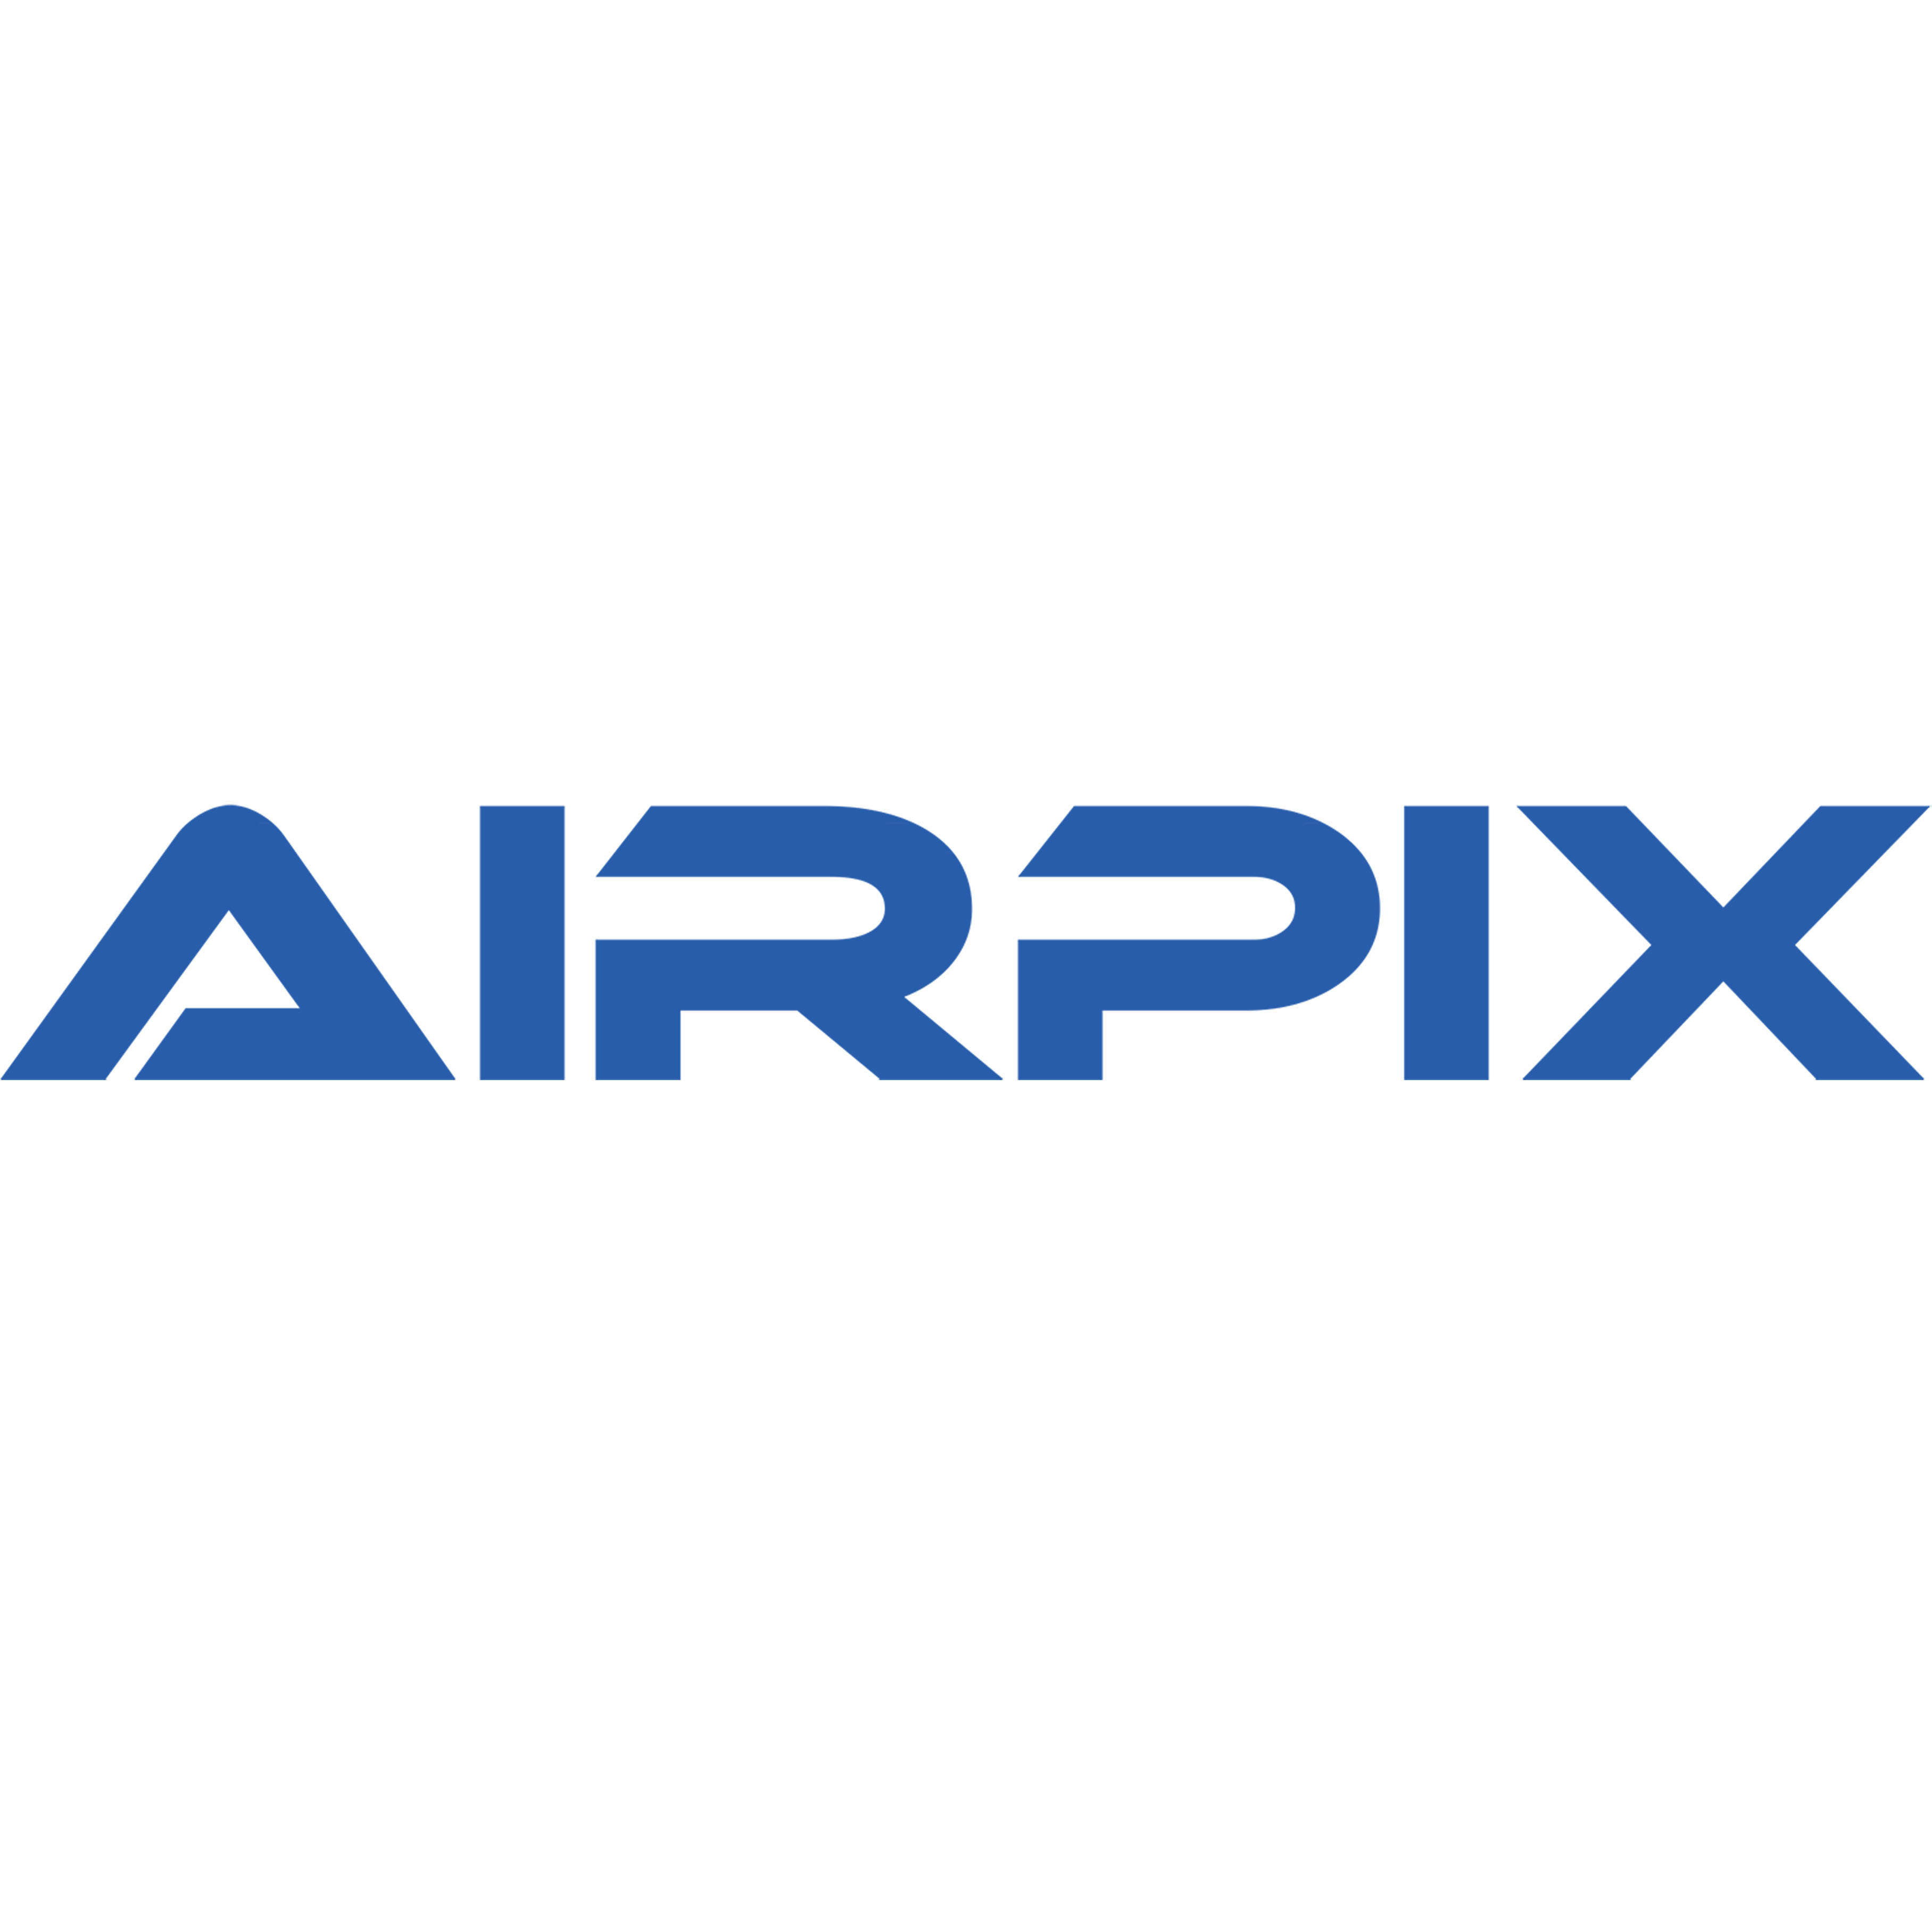 Airpix - Crunchbase Company Profile & Funding